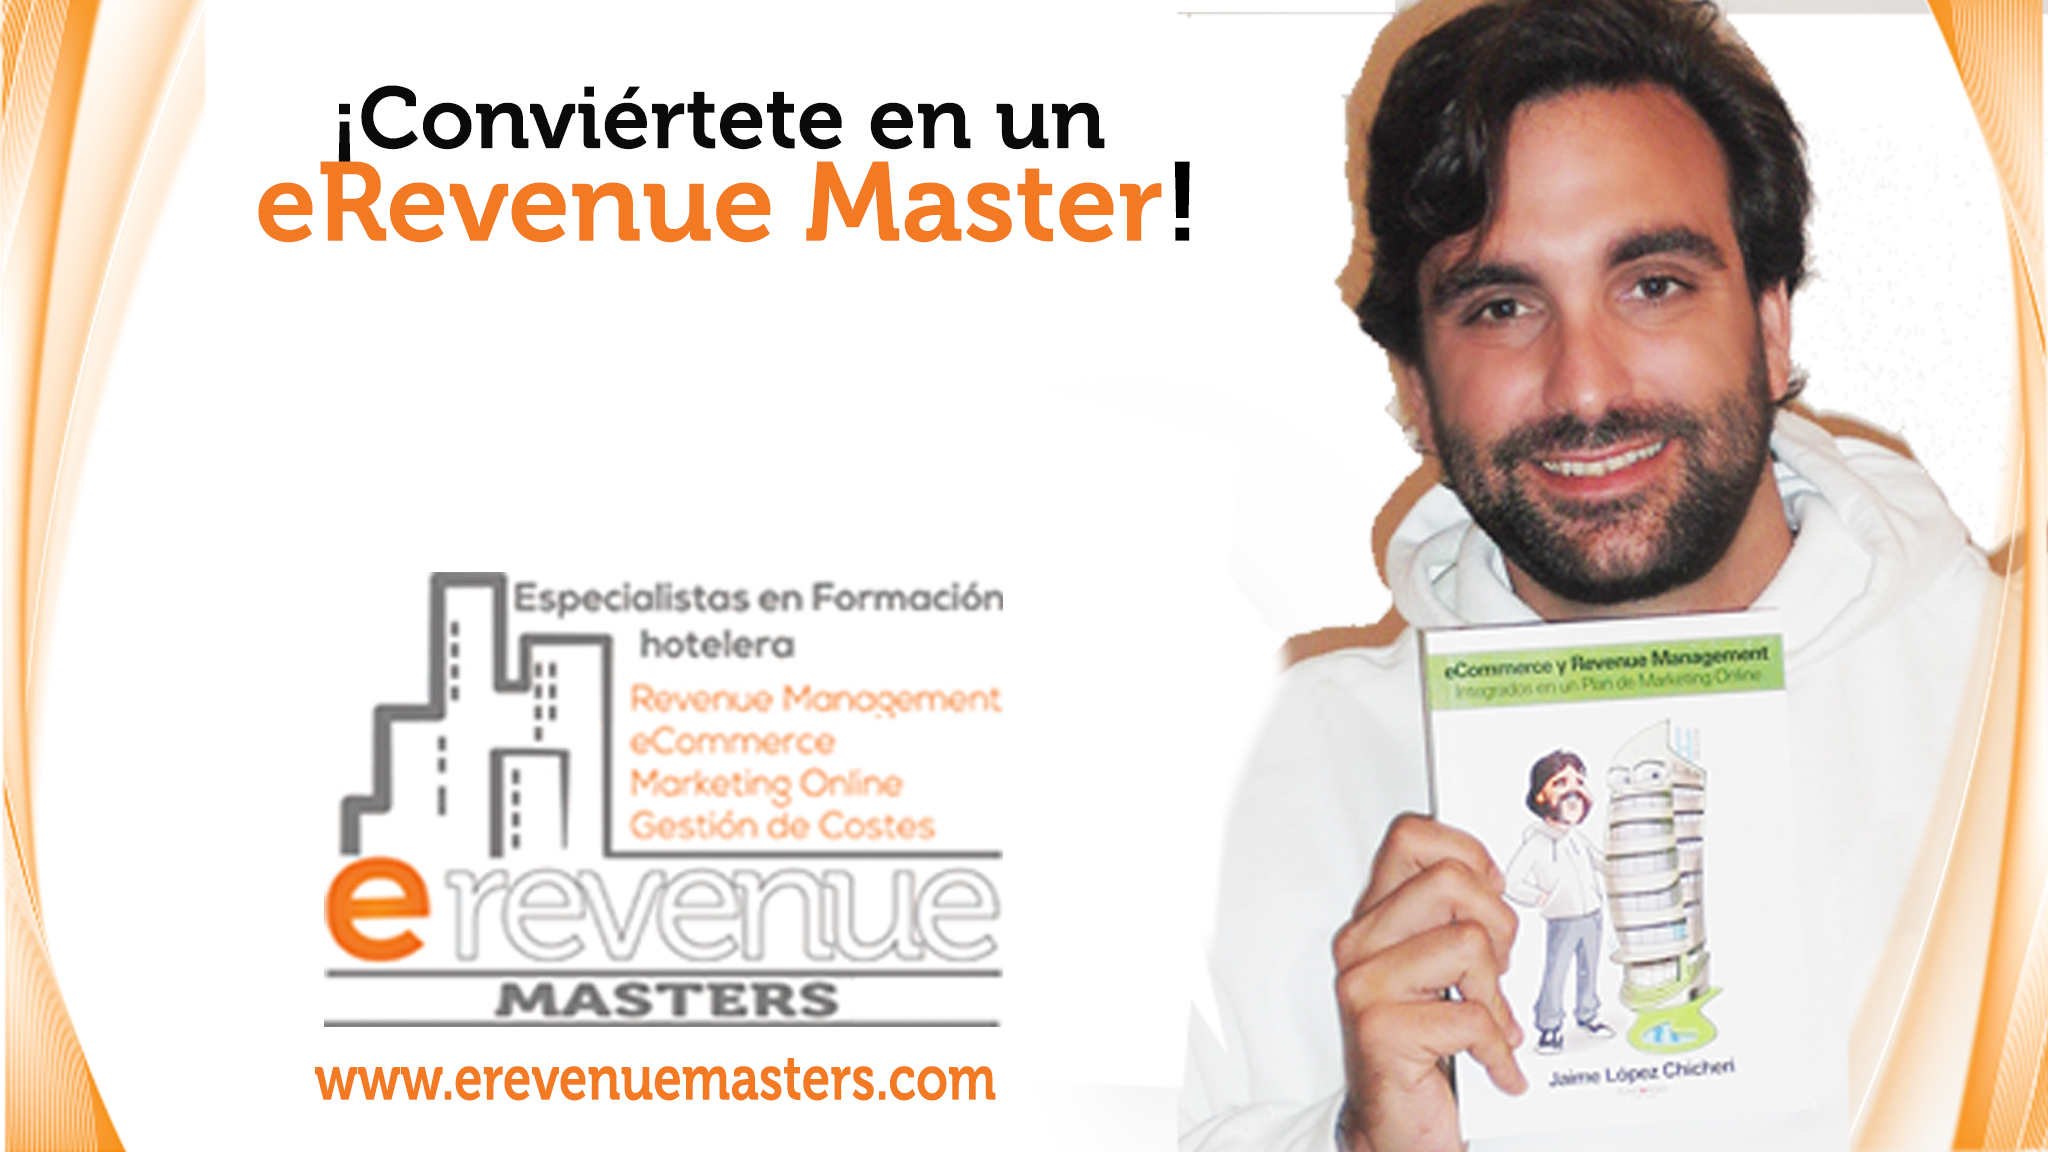 eRevenue Masters - escuela de negocios revenue management, e commerce y marketing online para hoteles